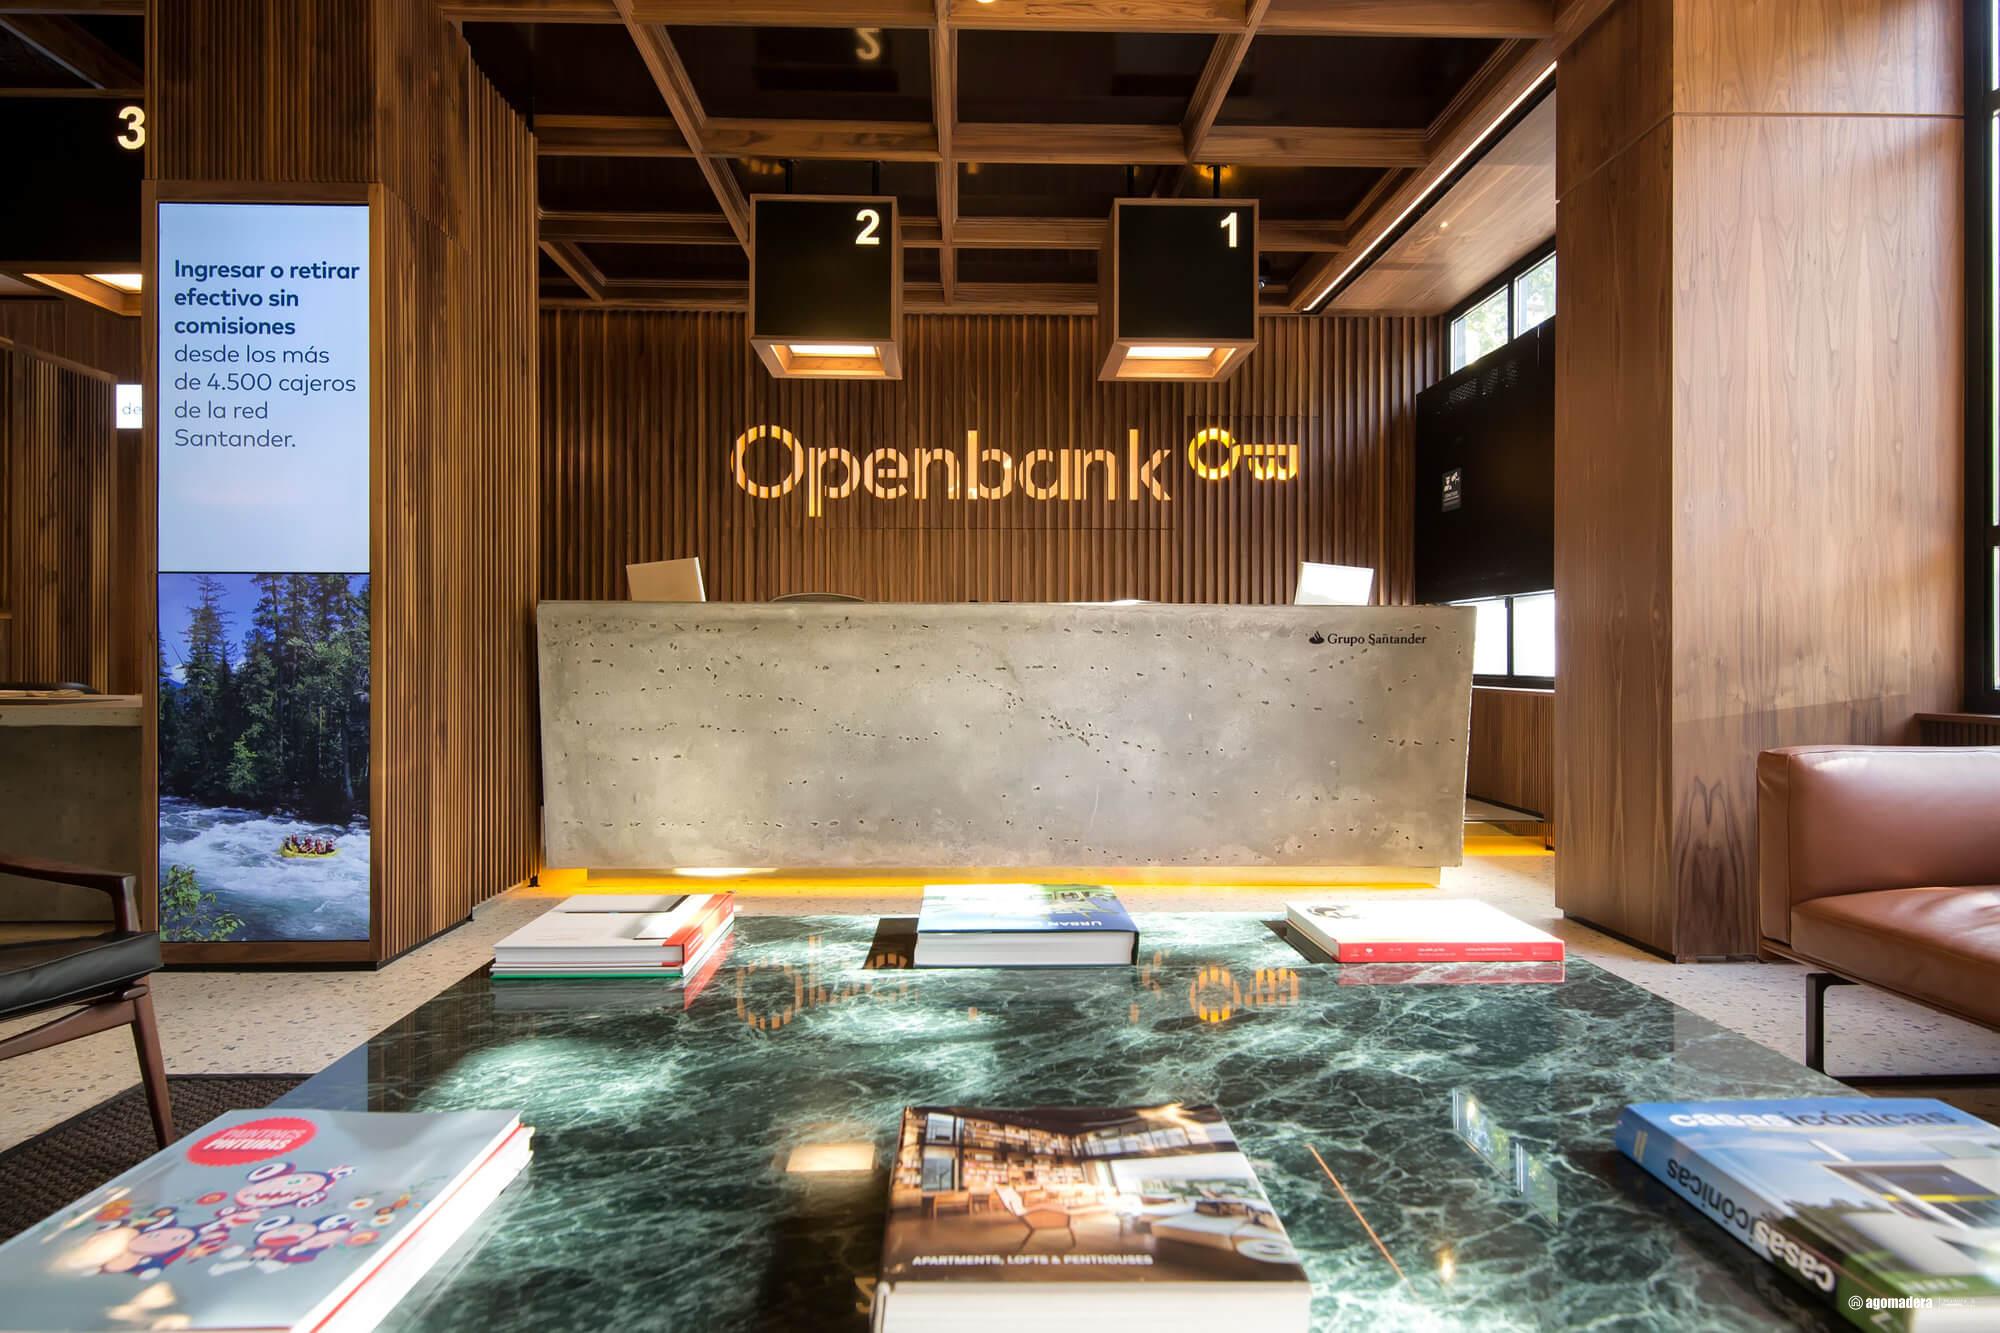 Sucursal Openbank, Madrid